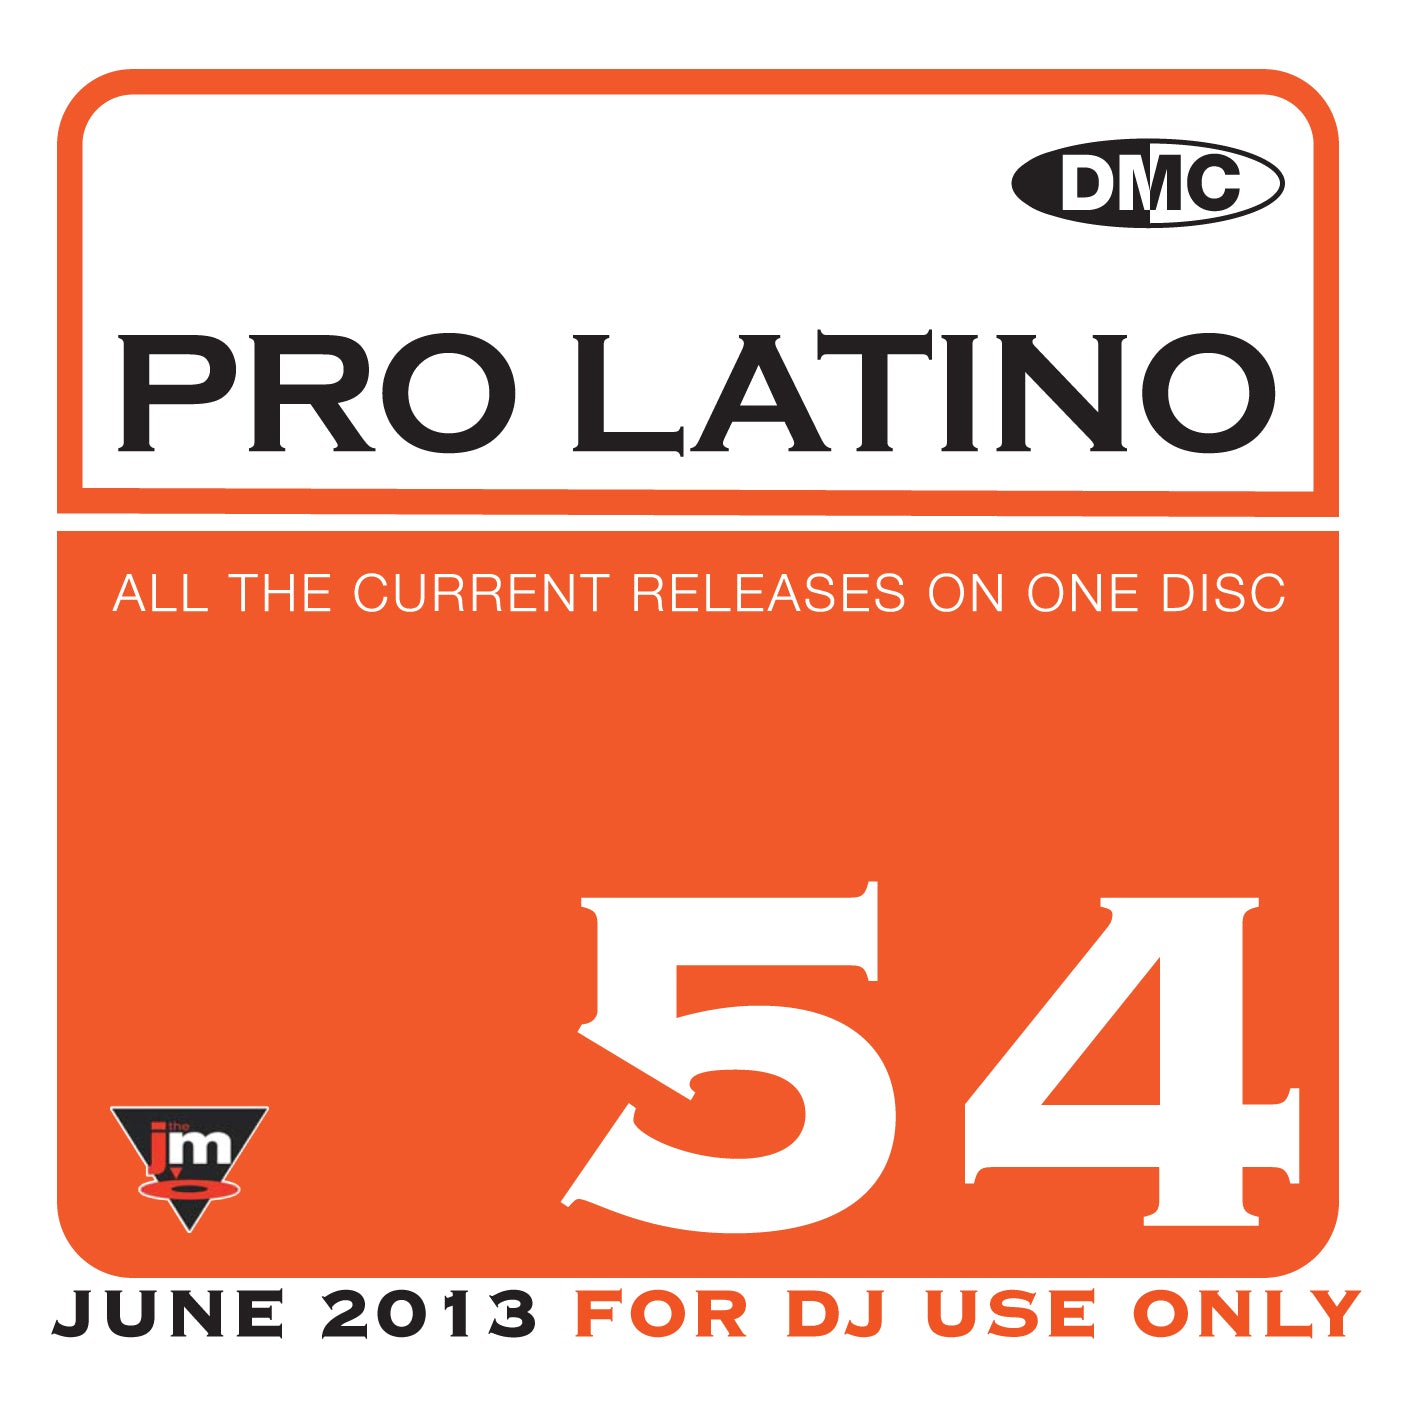 DMC Pro Latino 54